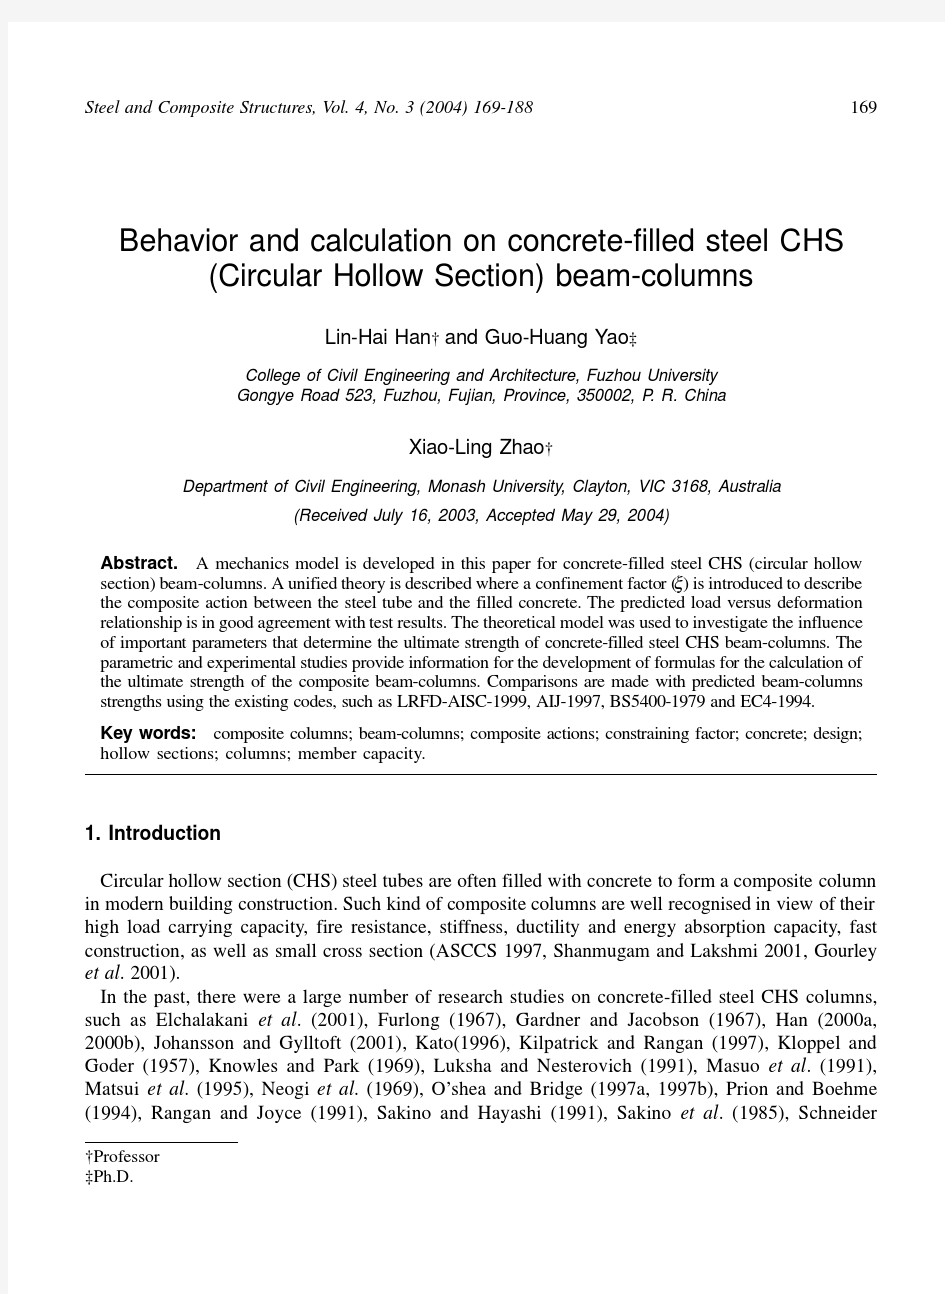 behaviour and calculation on CFST beam-columns